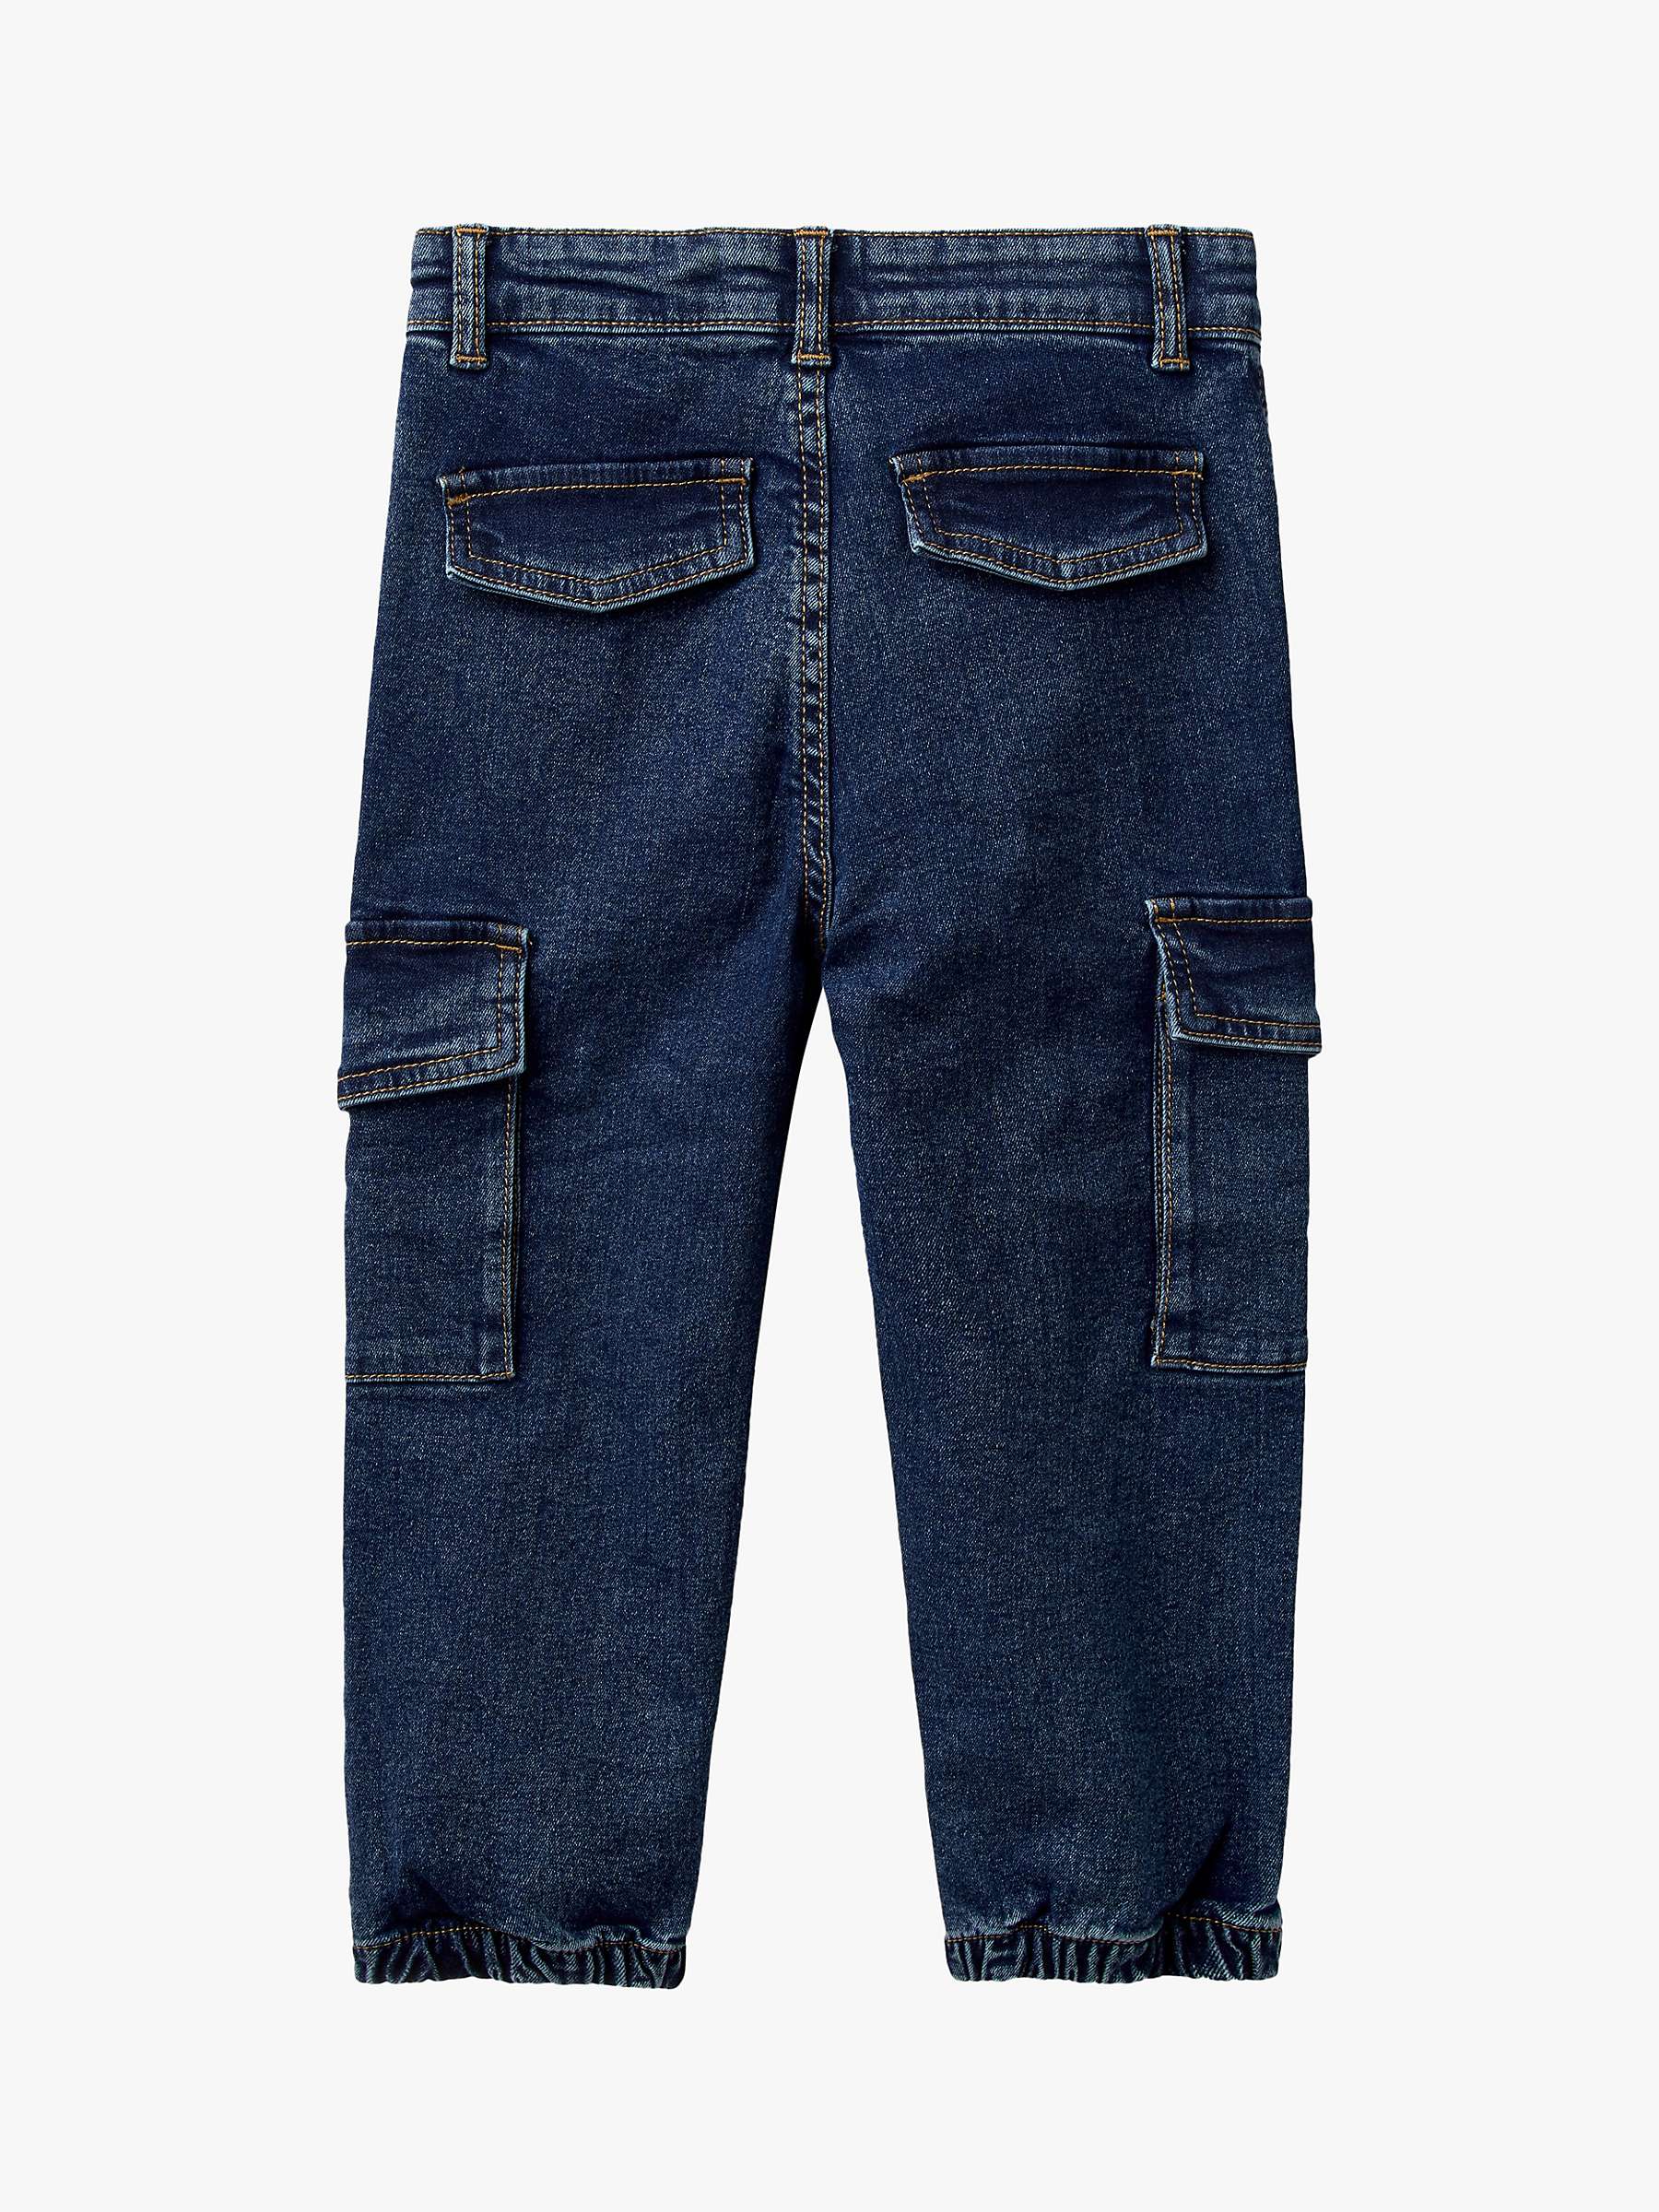 Buy Benetton Boy's Slim Fit Cargo Jeans, Blue Online at johnlewis.com